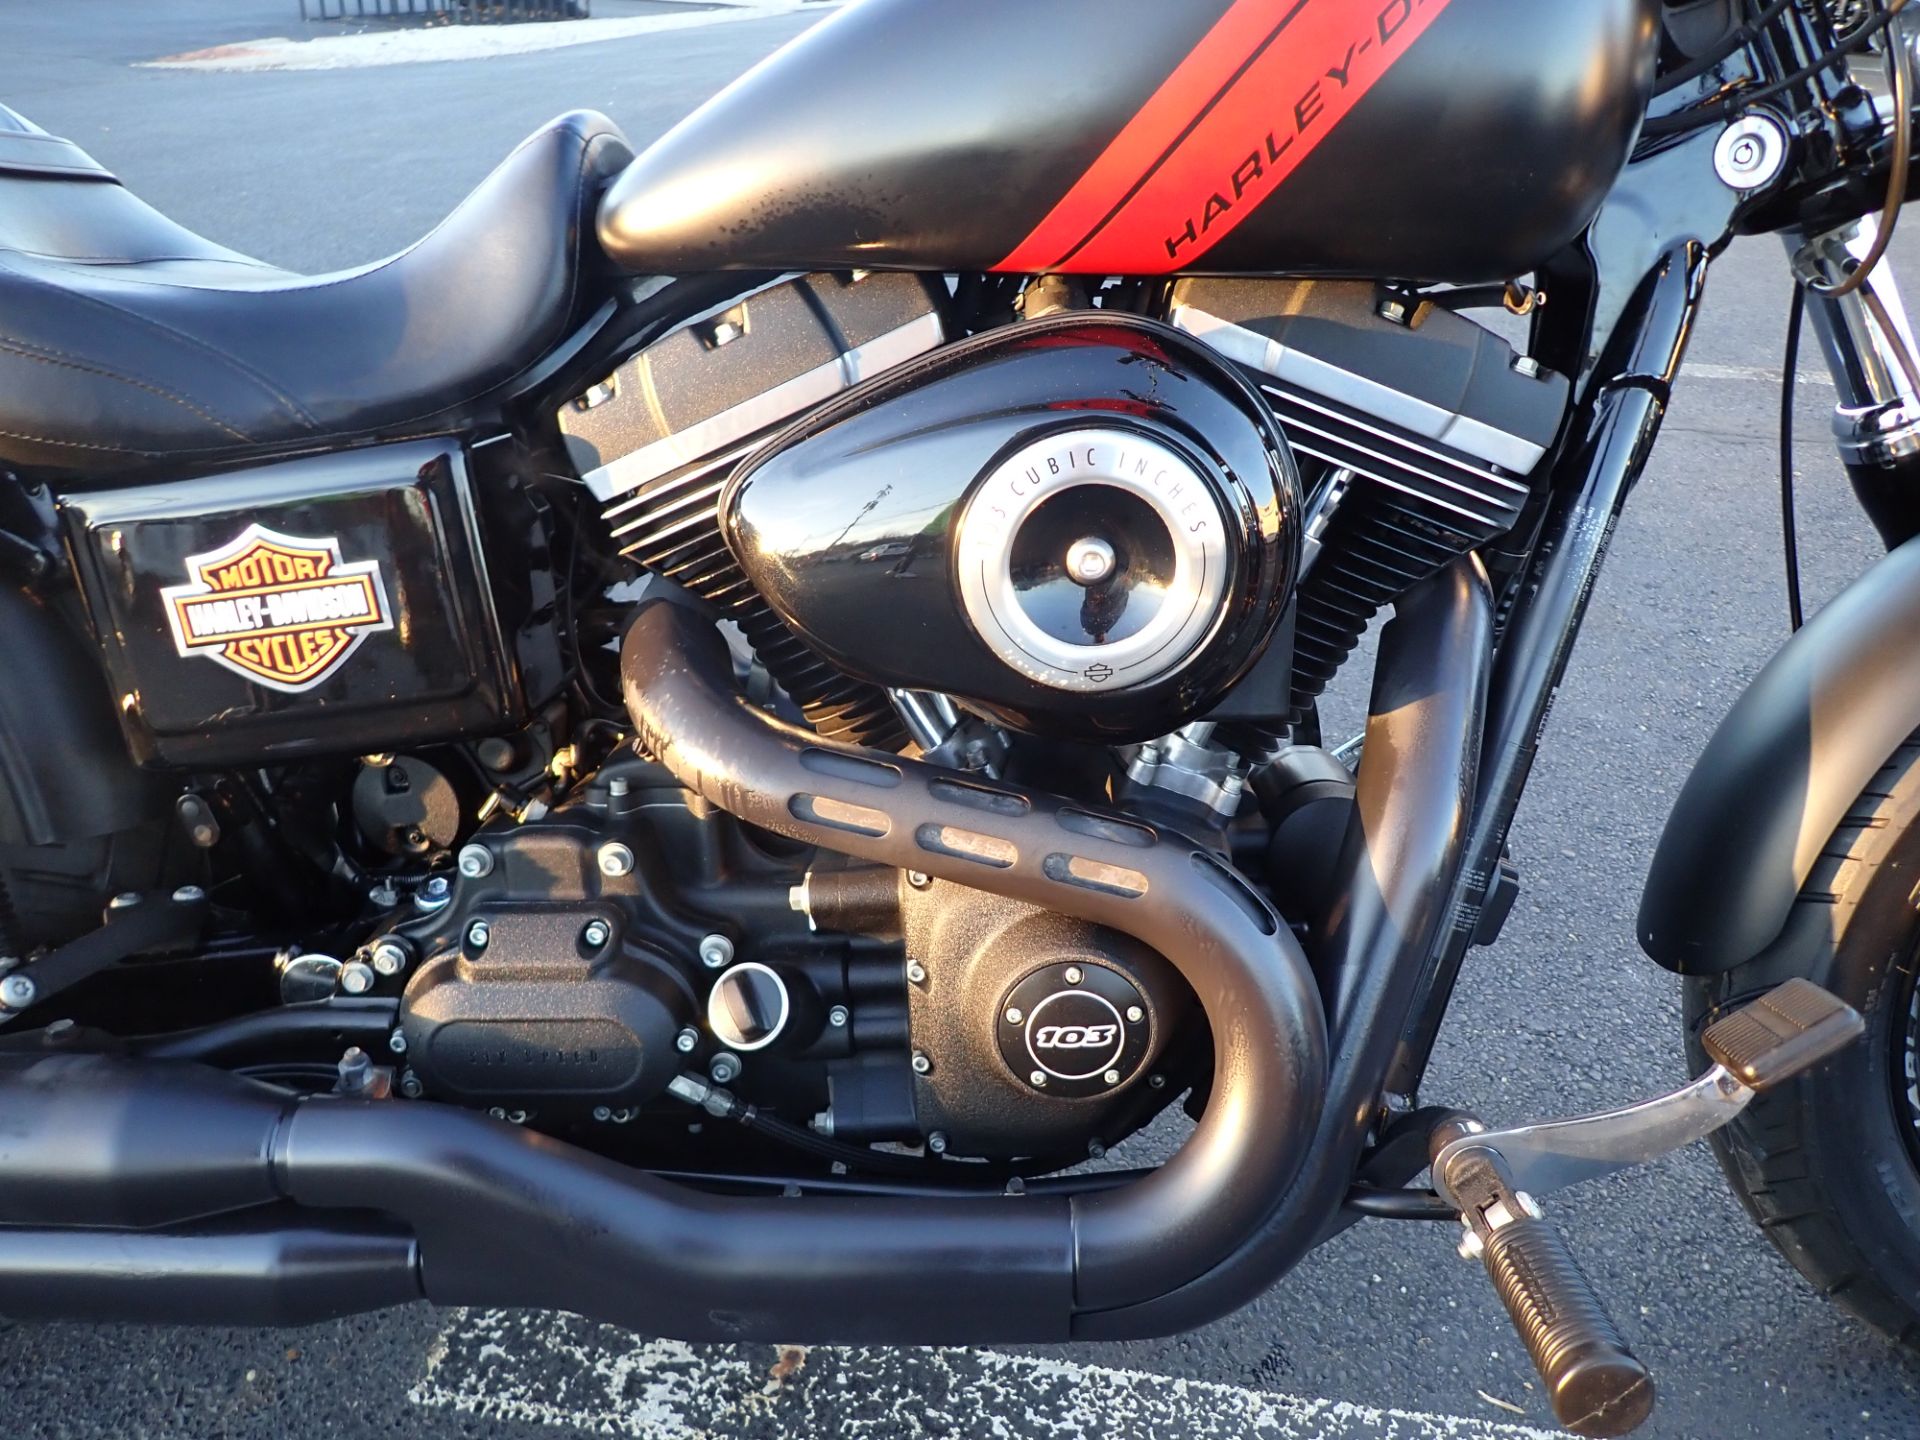 2014 Harley-Davidson Dyna® Fat Bob® in Massillon, Ohio - Photo 4